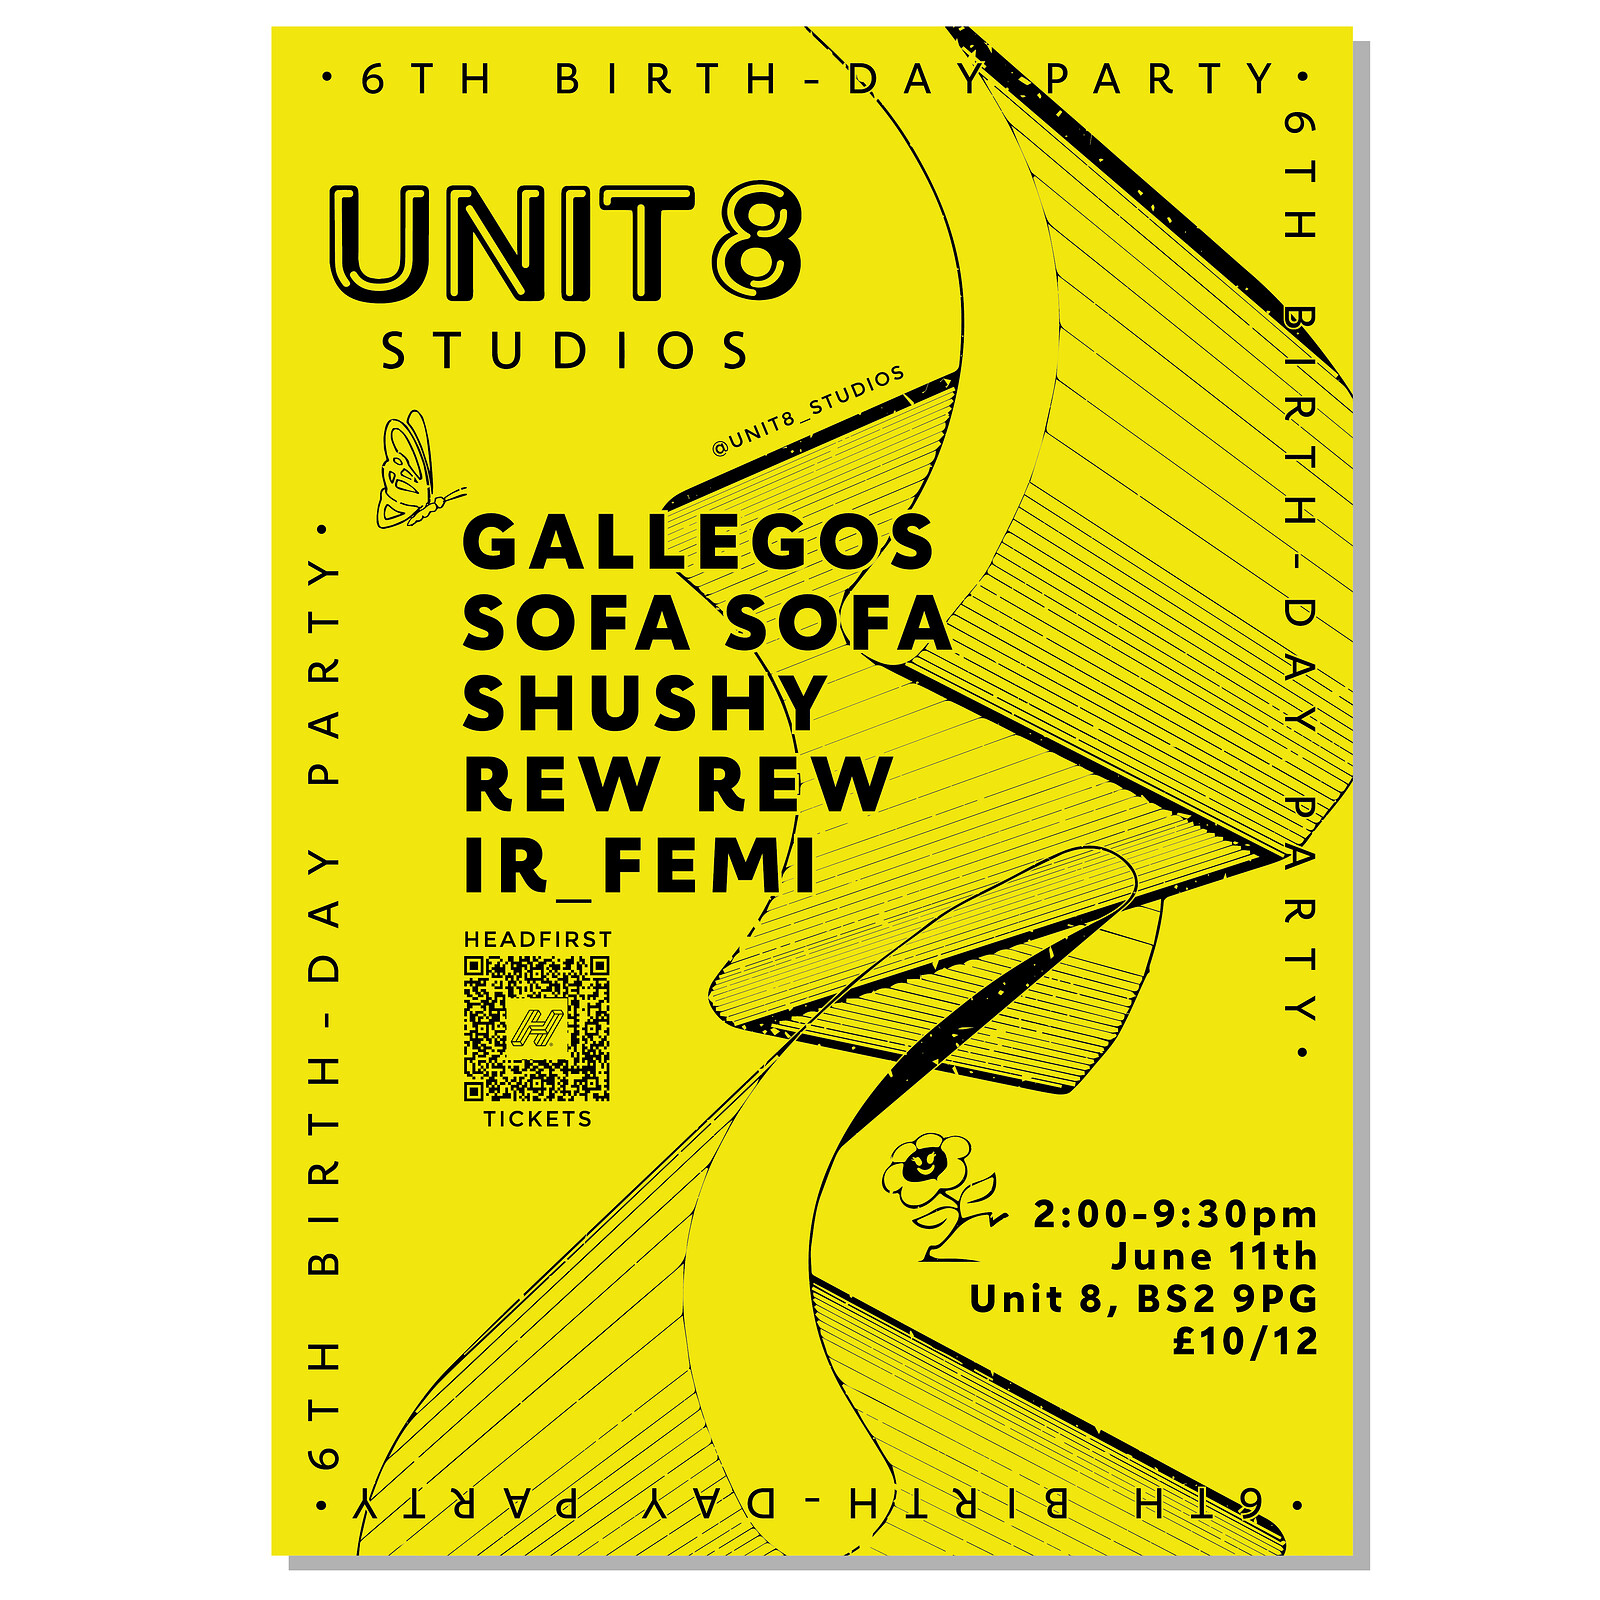 Unit8 Studios 6th Birthday w/ GALLEGOS at Unit8 Studios